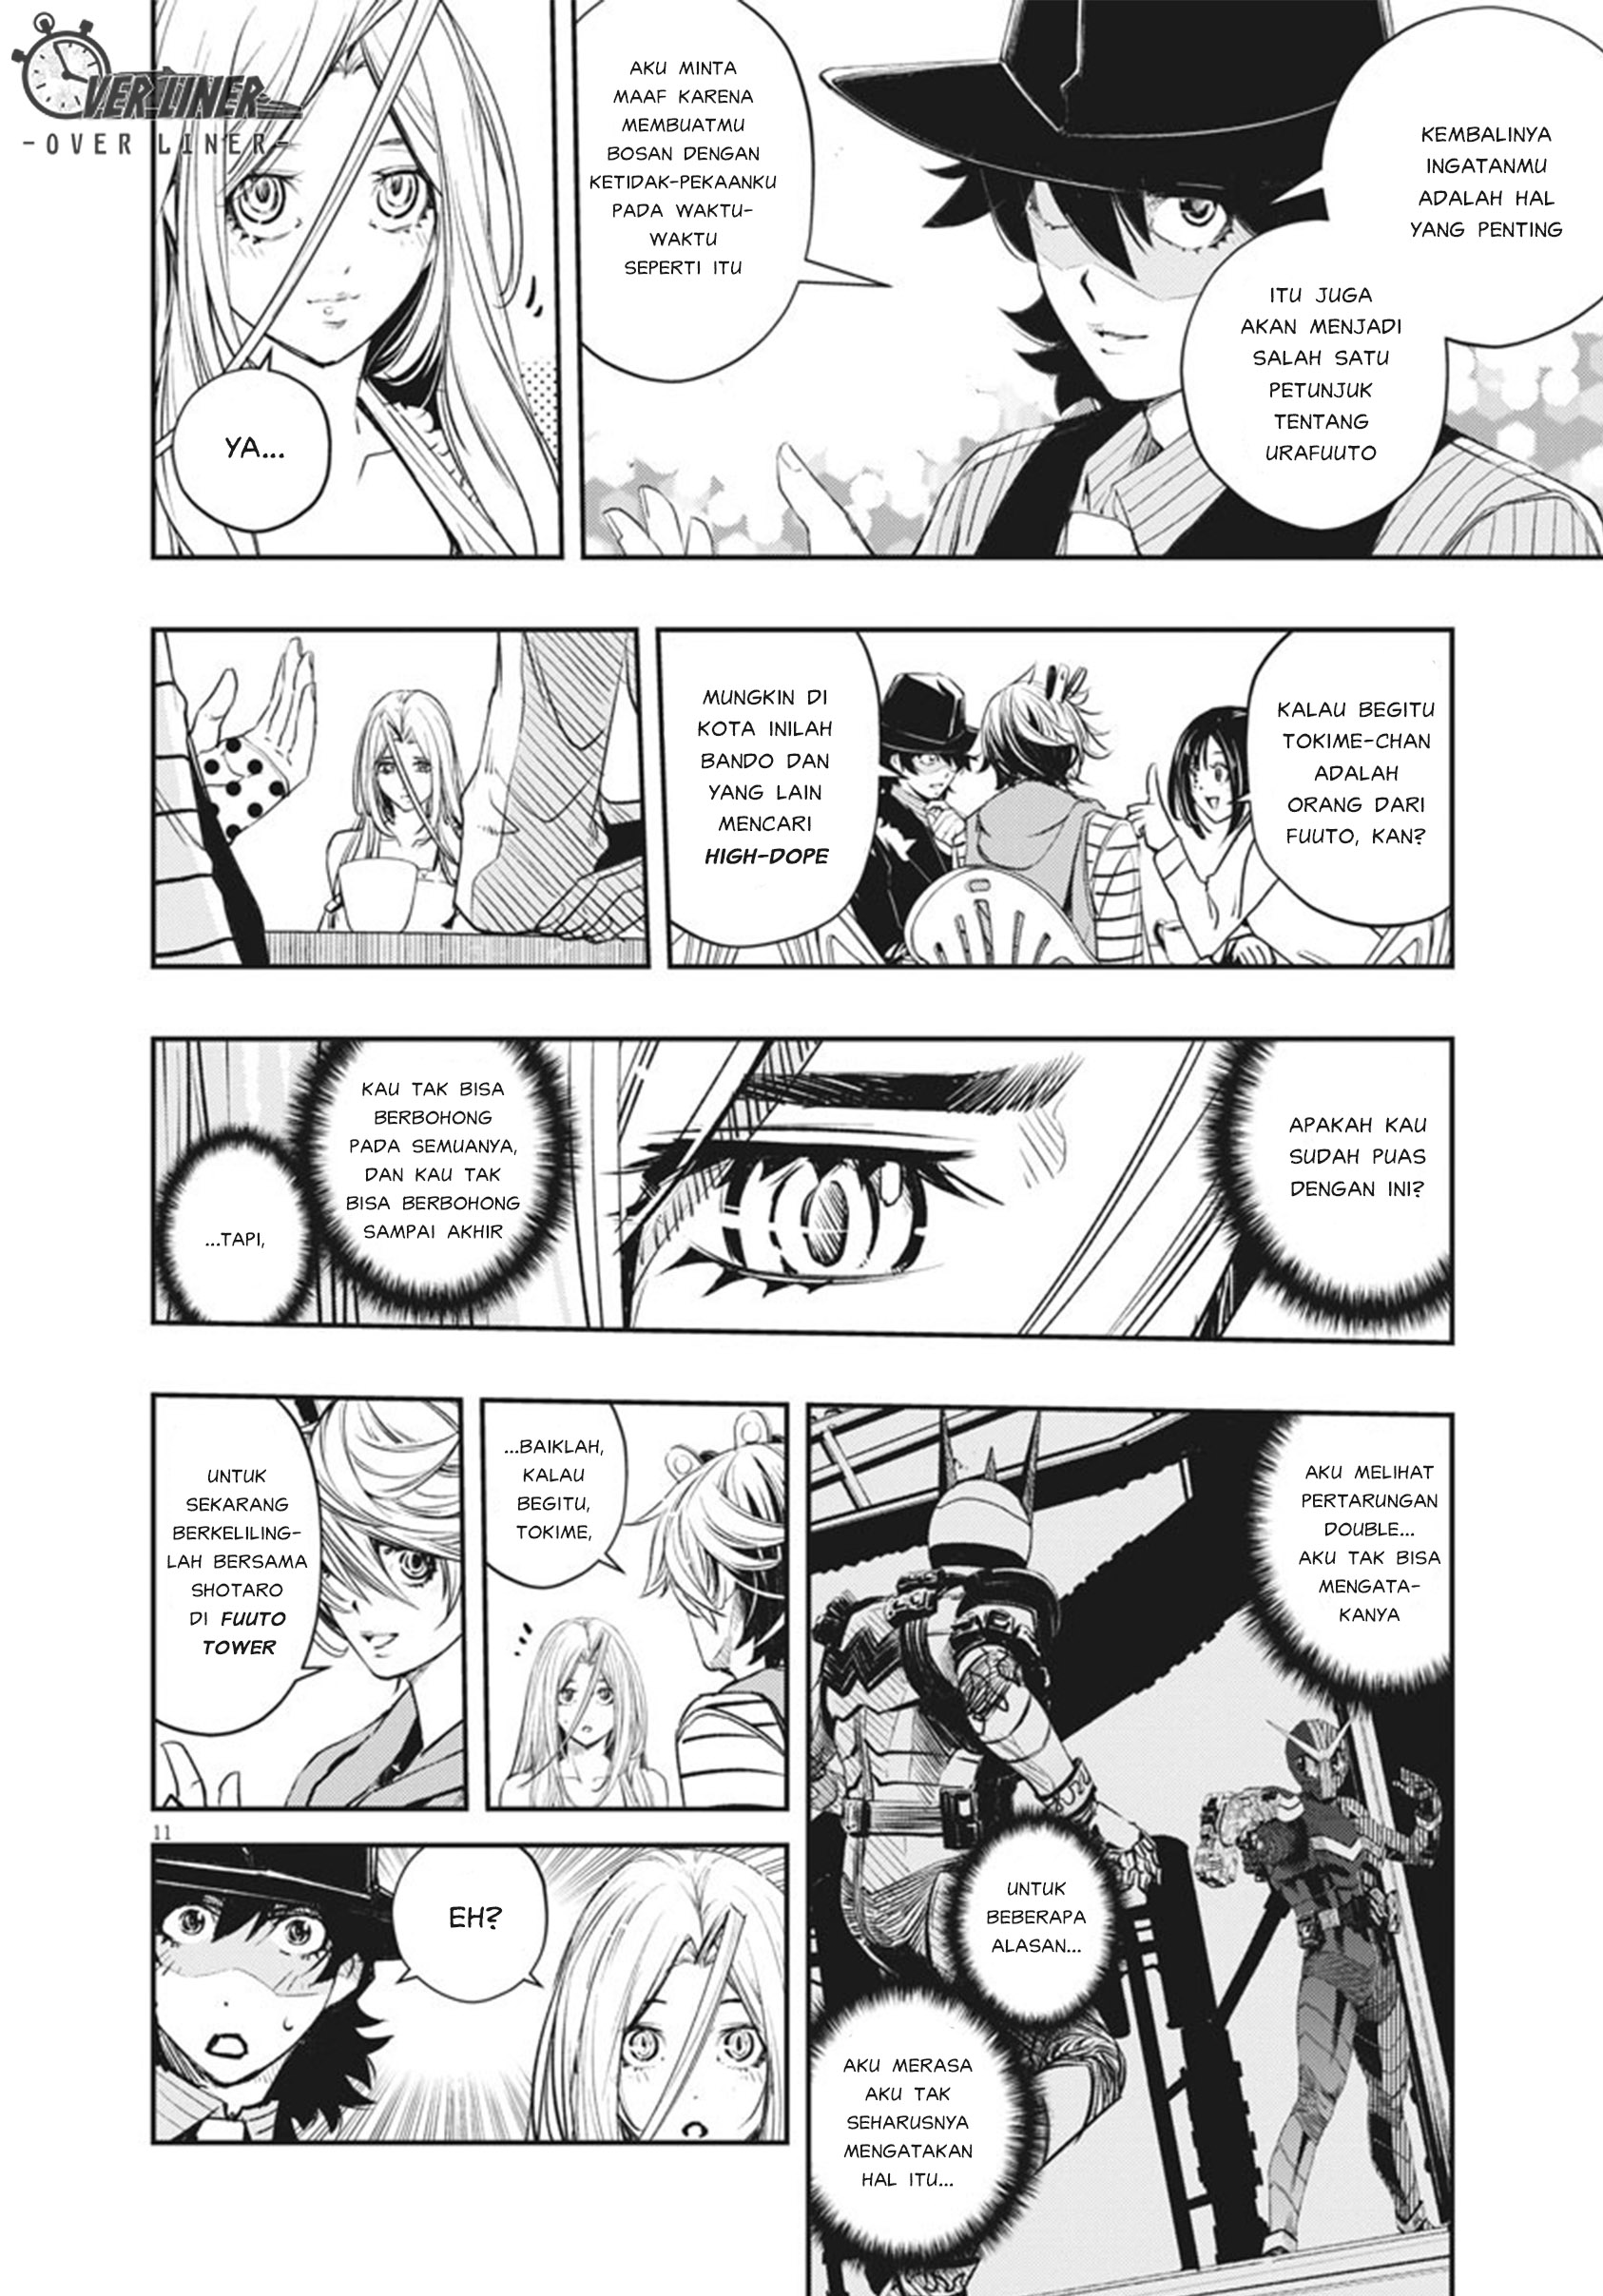 Kamen Rider W Fuuto Tantei Chapter 75